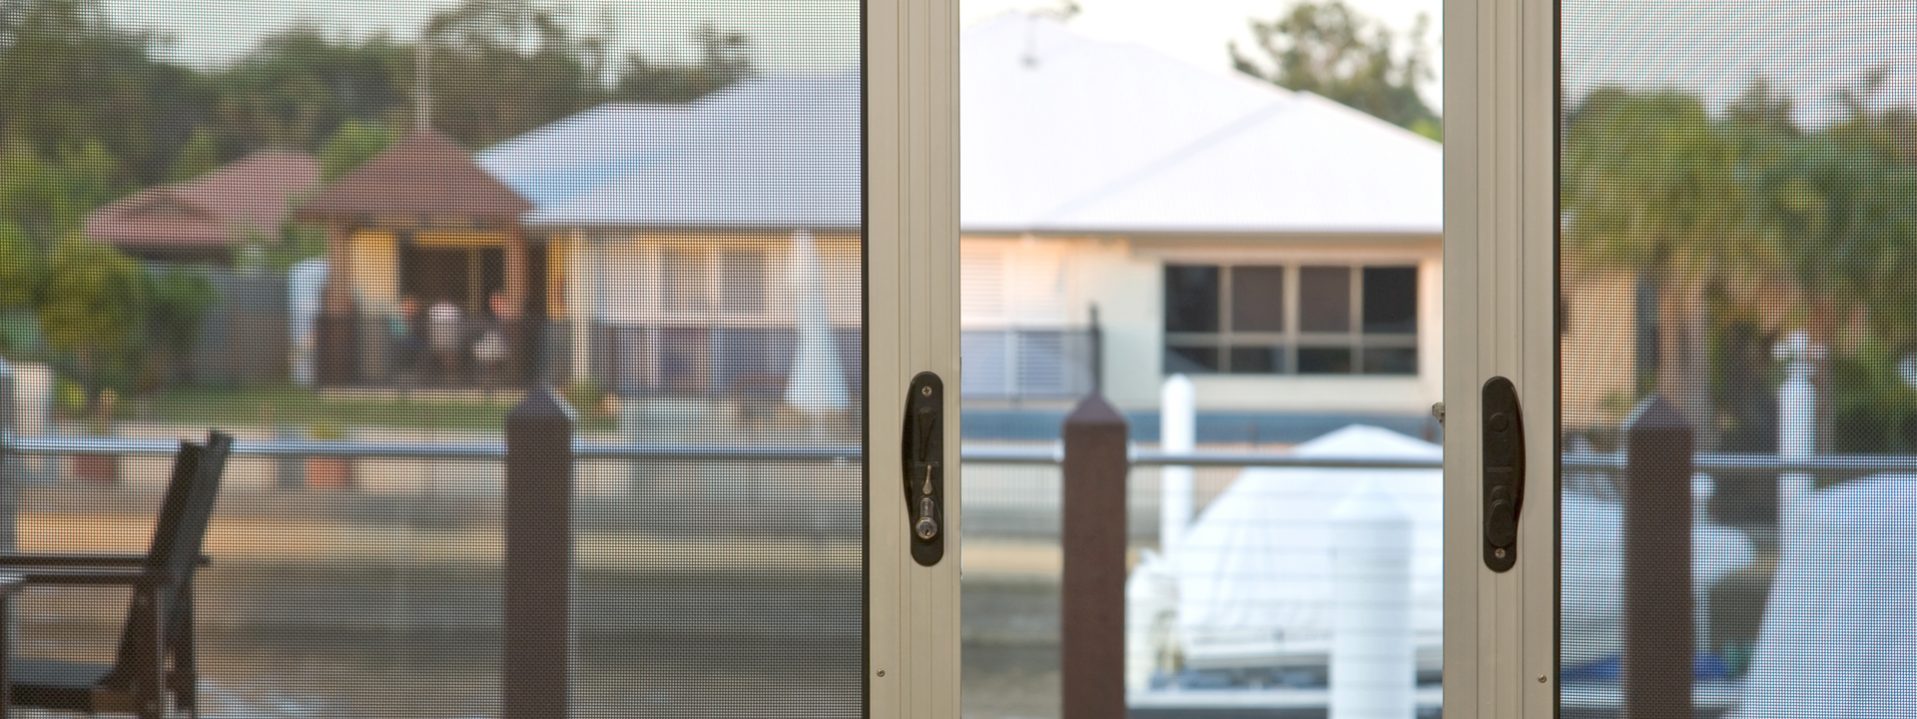  A close-up of an aluminium sliding security screen door located within a Malaga backyard.